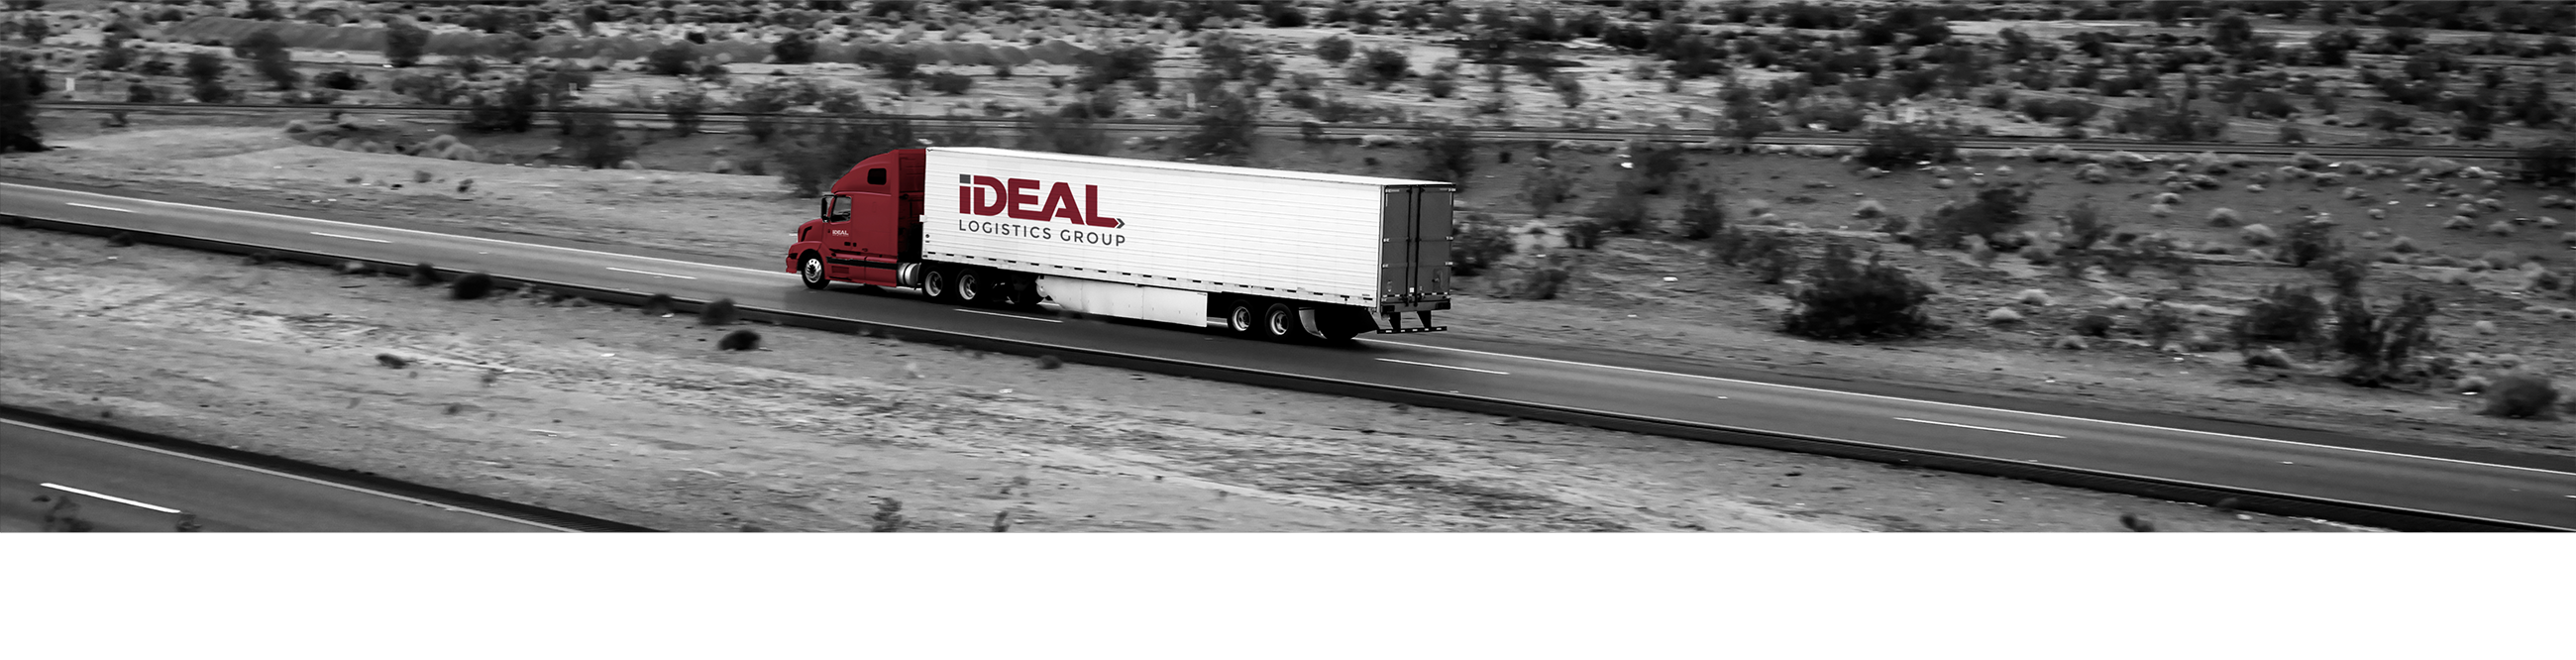 Ideal logistics truck on road